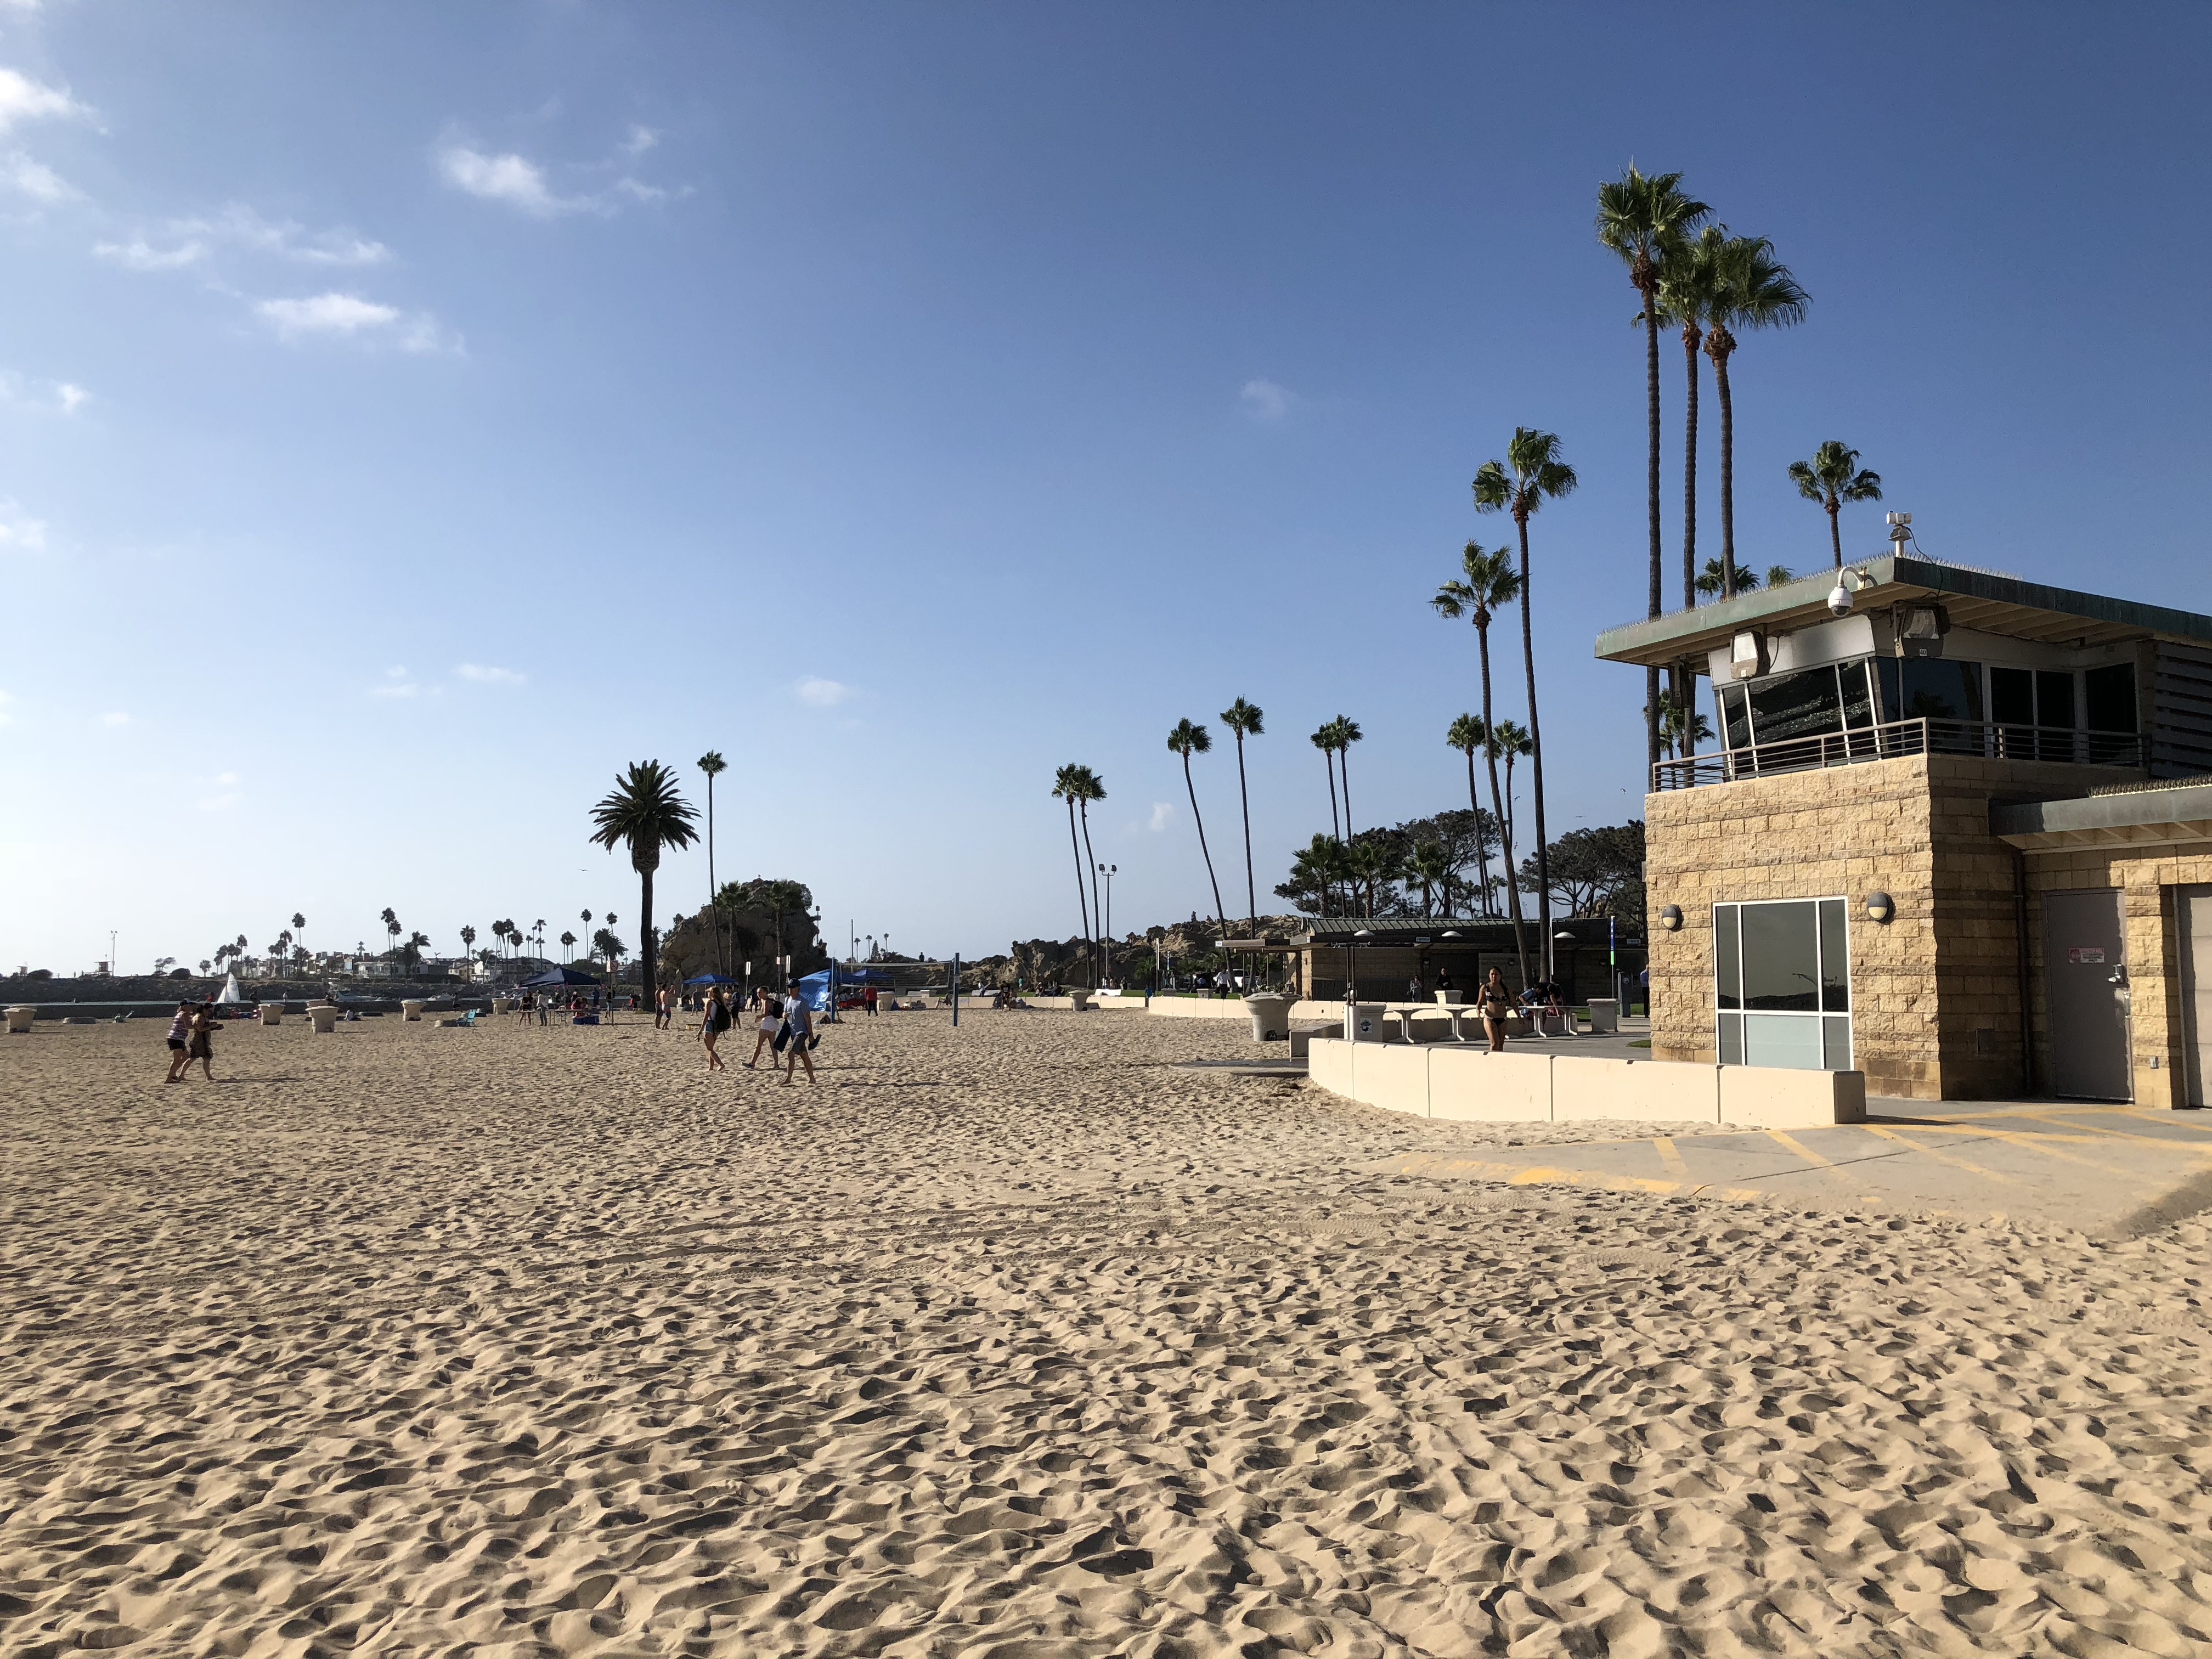 Josh and Aaron at Corona del Mar State Beach in California 10-06-2018 Looking Back Towards the Beach